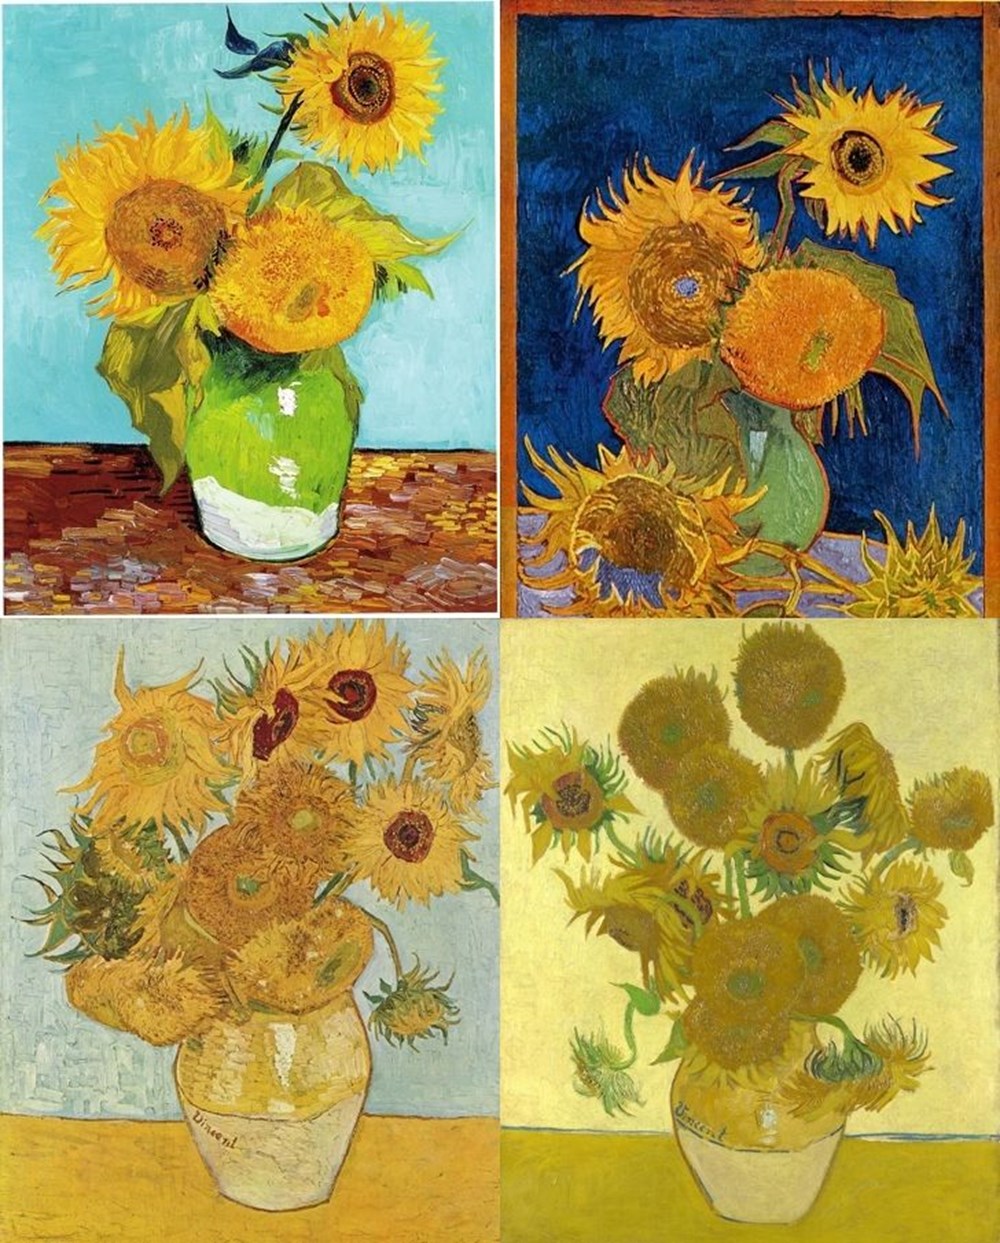 Ressam Vincent Van Gogh kulağını neden kesti?